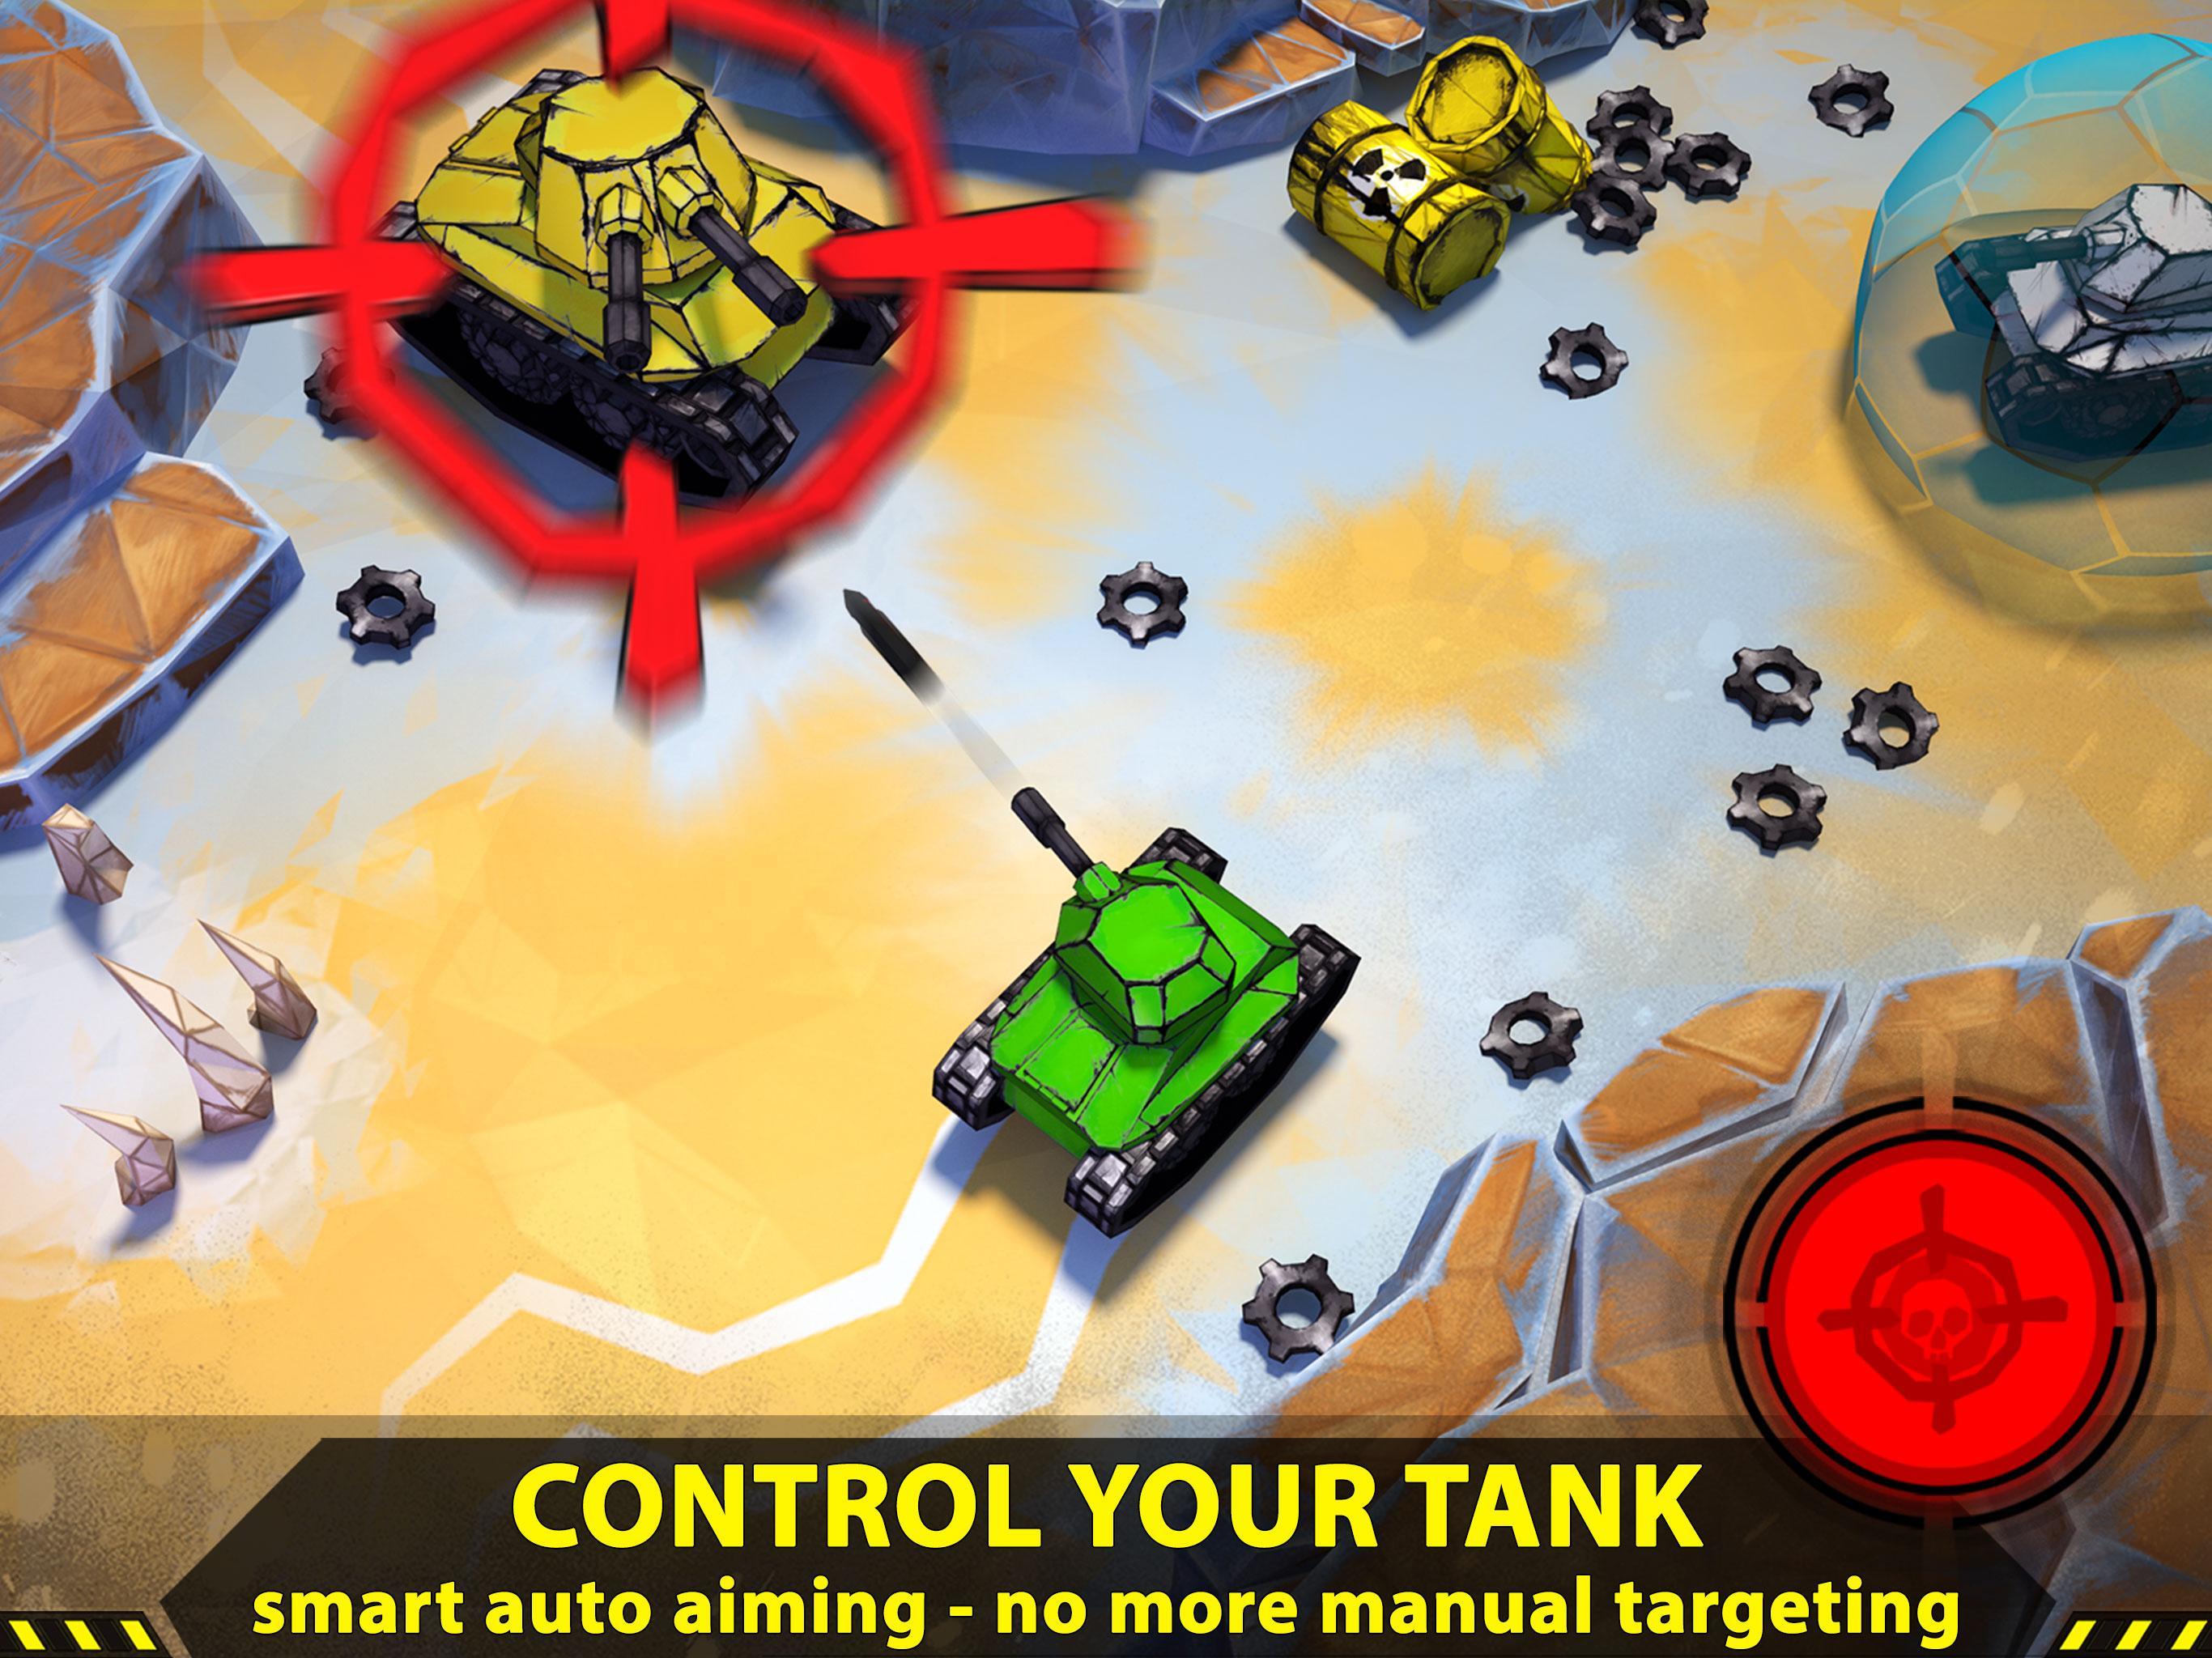 Screenshot of Crash of Tanks: Pocket Mayhem